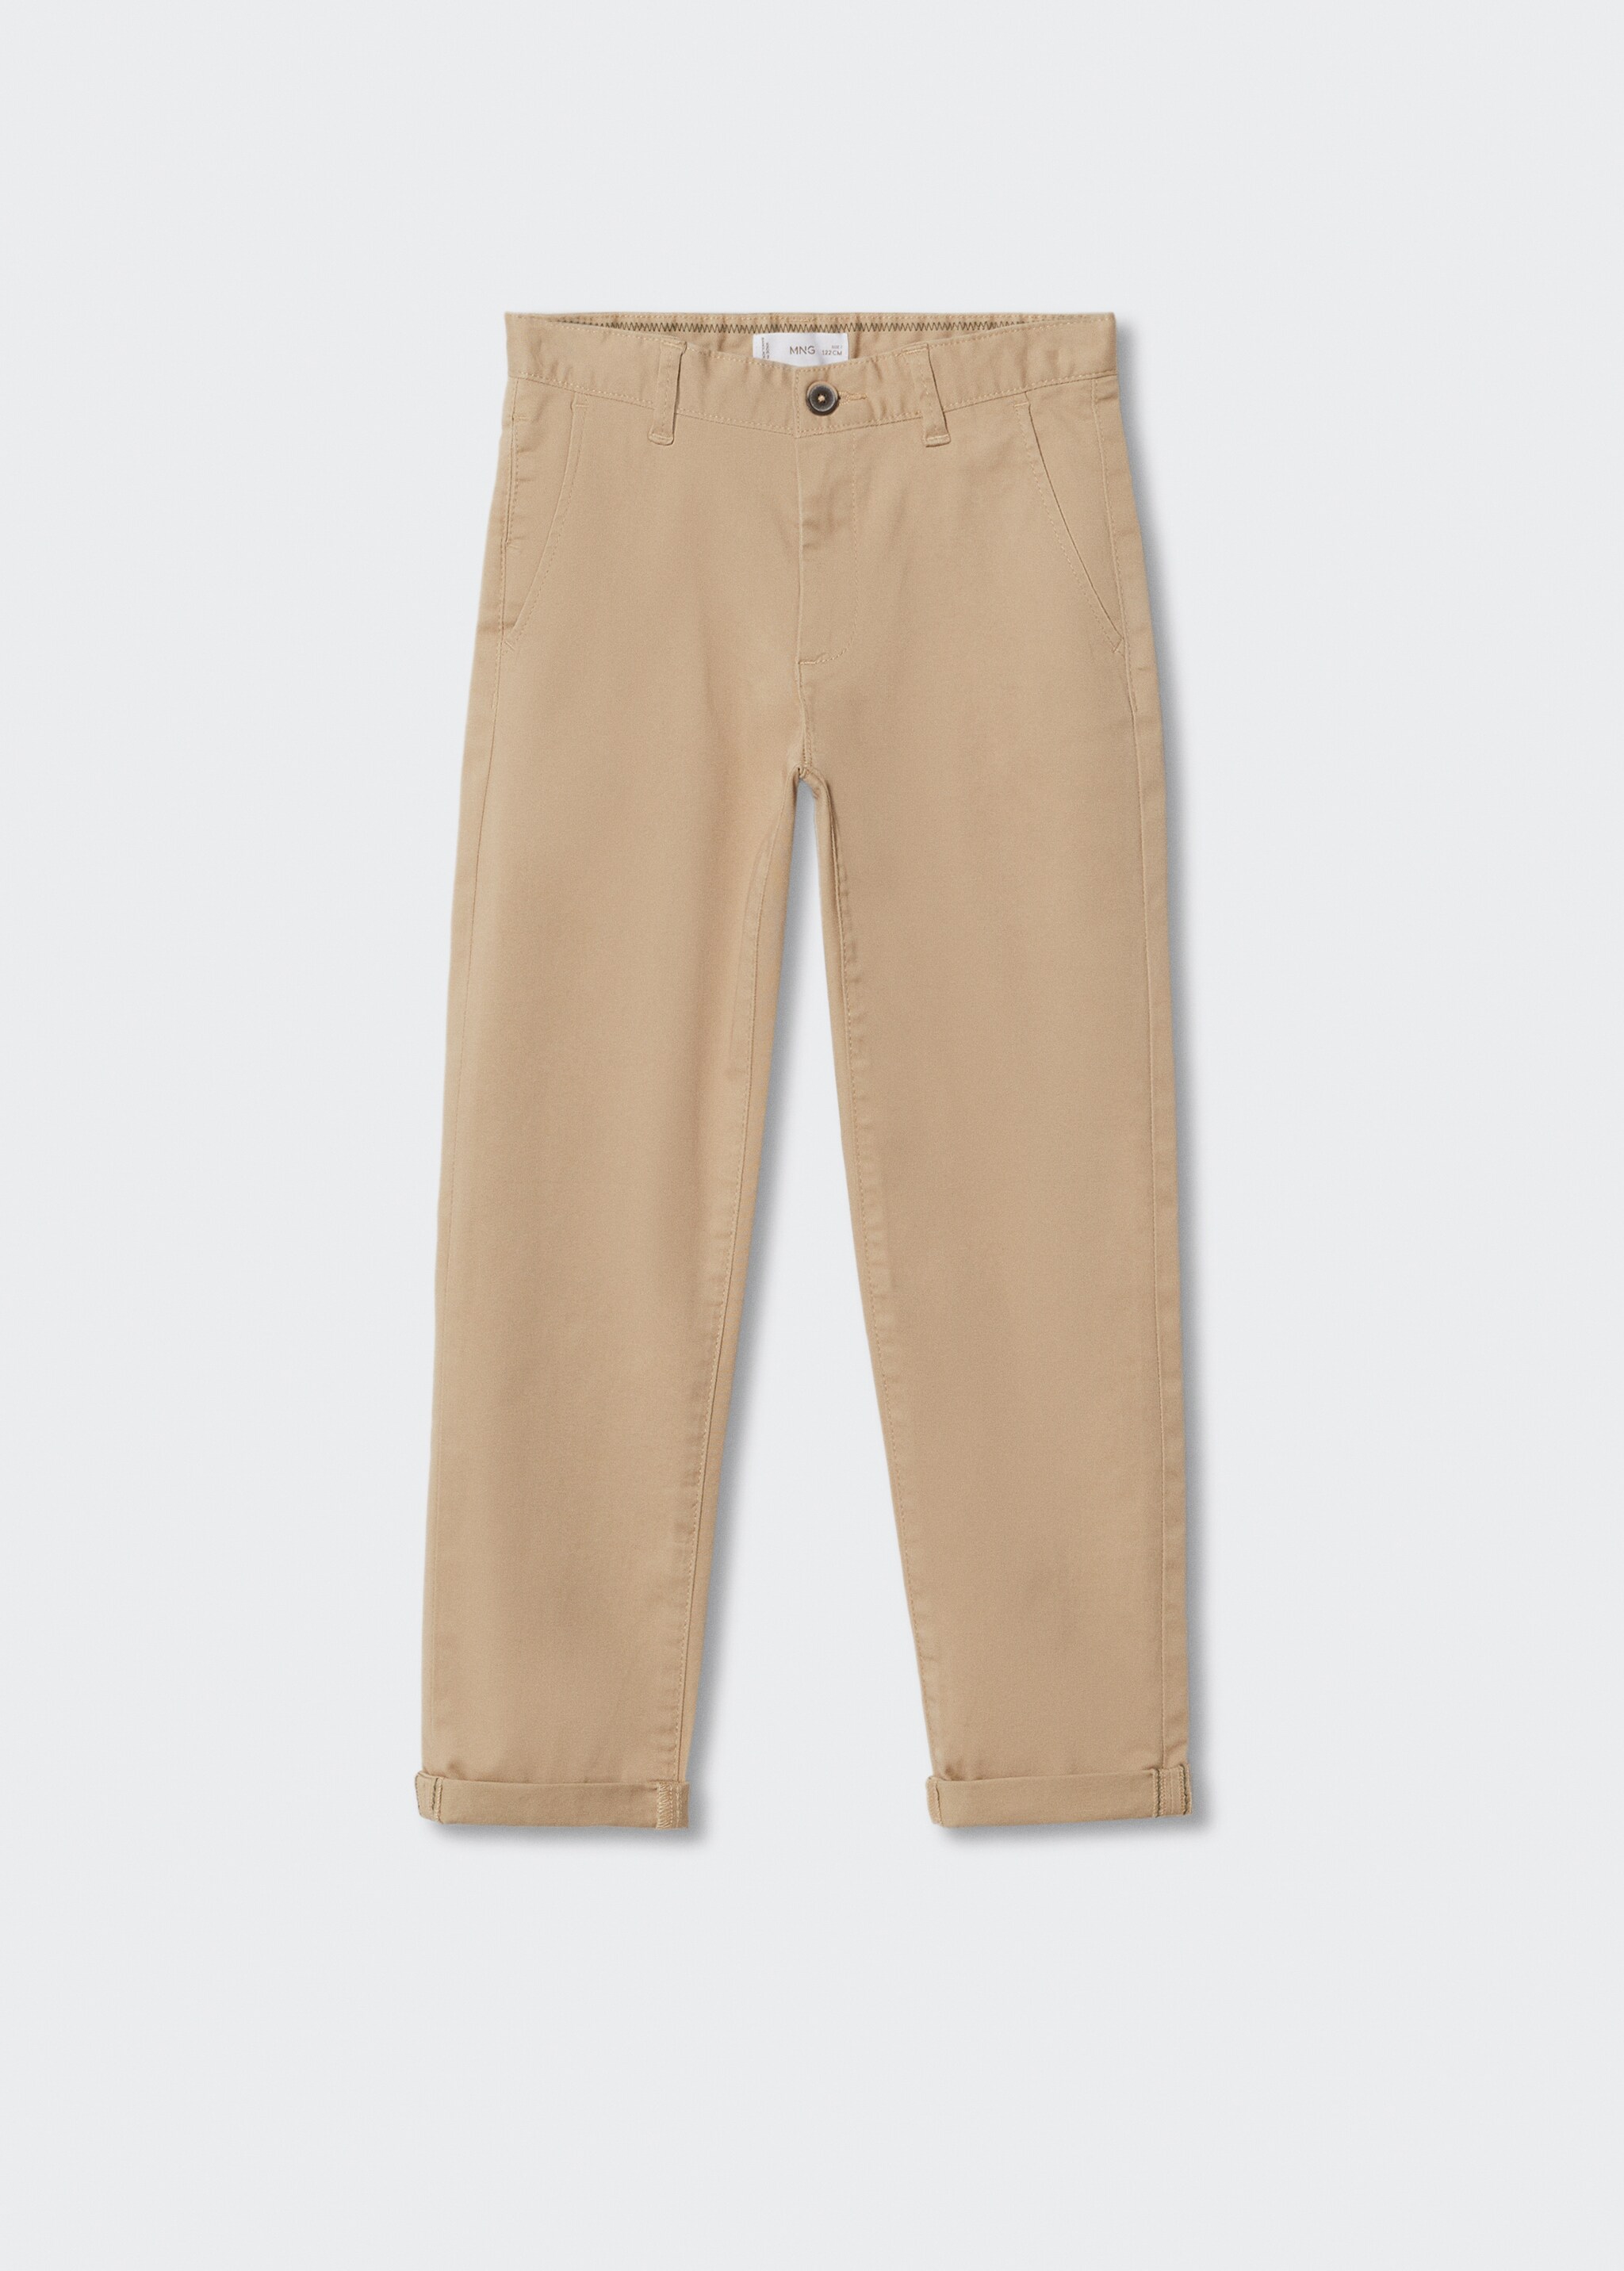 Pantalons xinesos cotó - Pla general